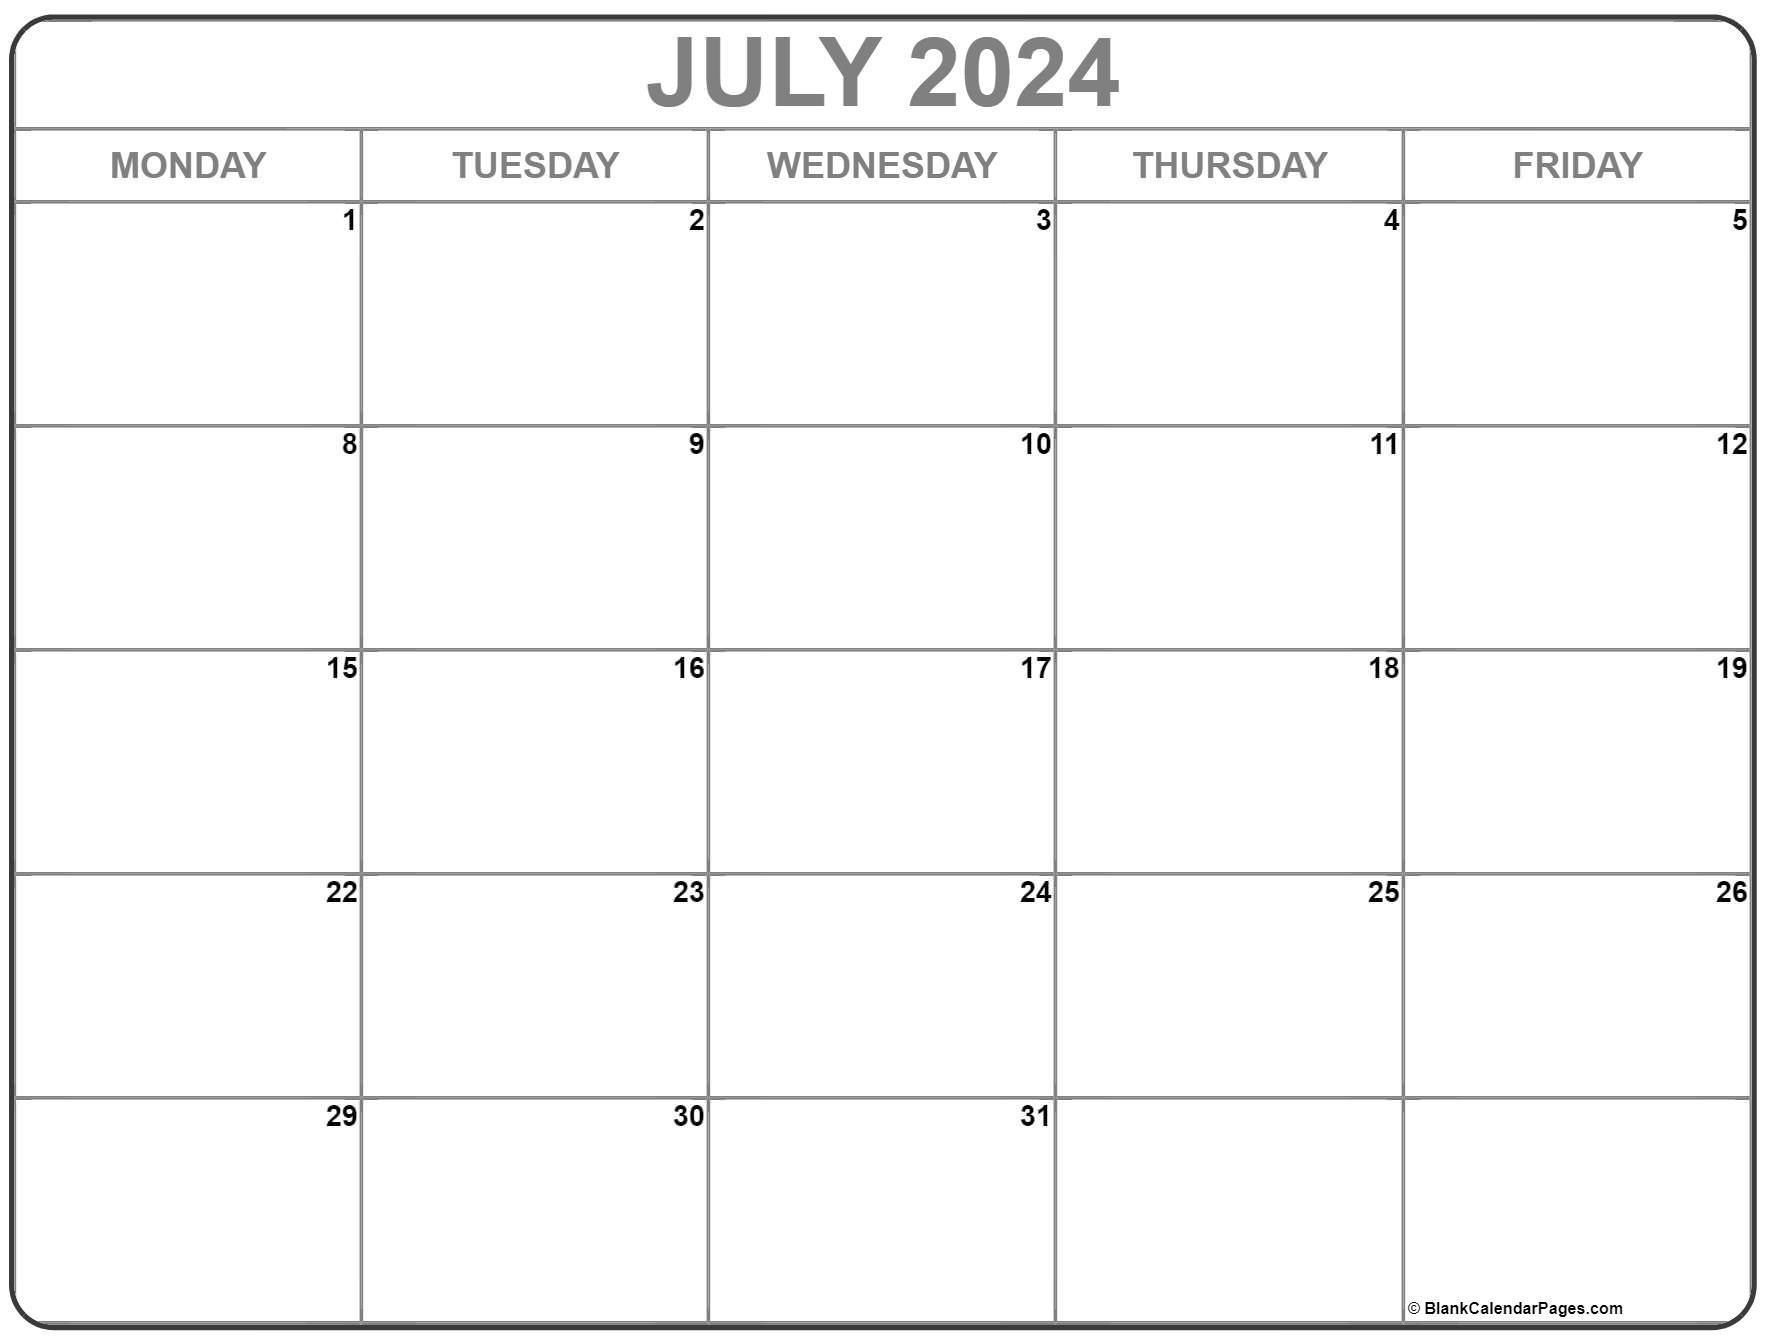 July 2024 Calendar Starting Monday Morningstar Lusa Patrice